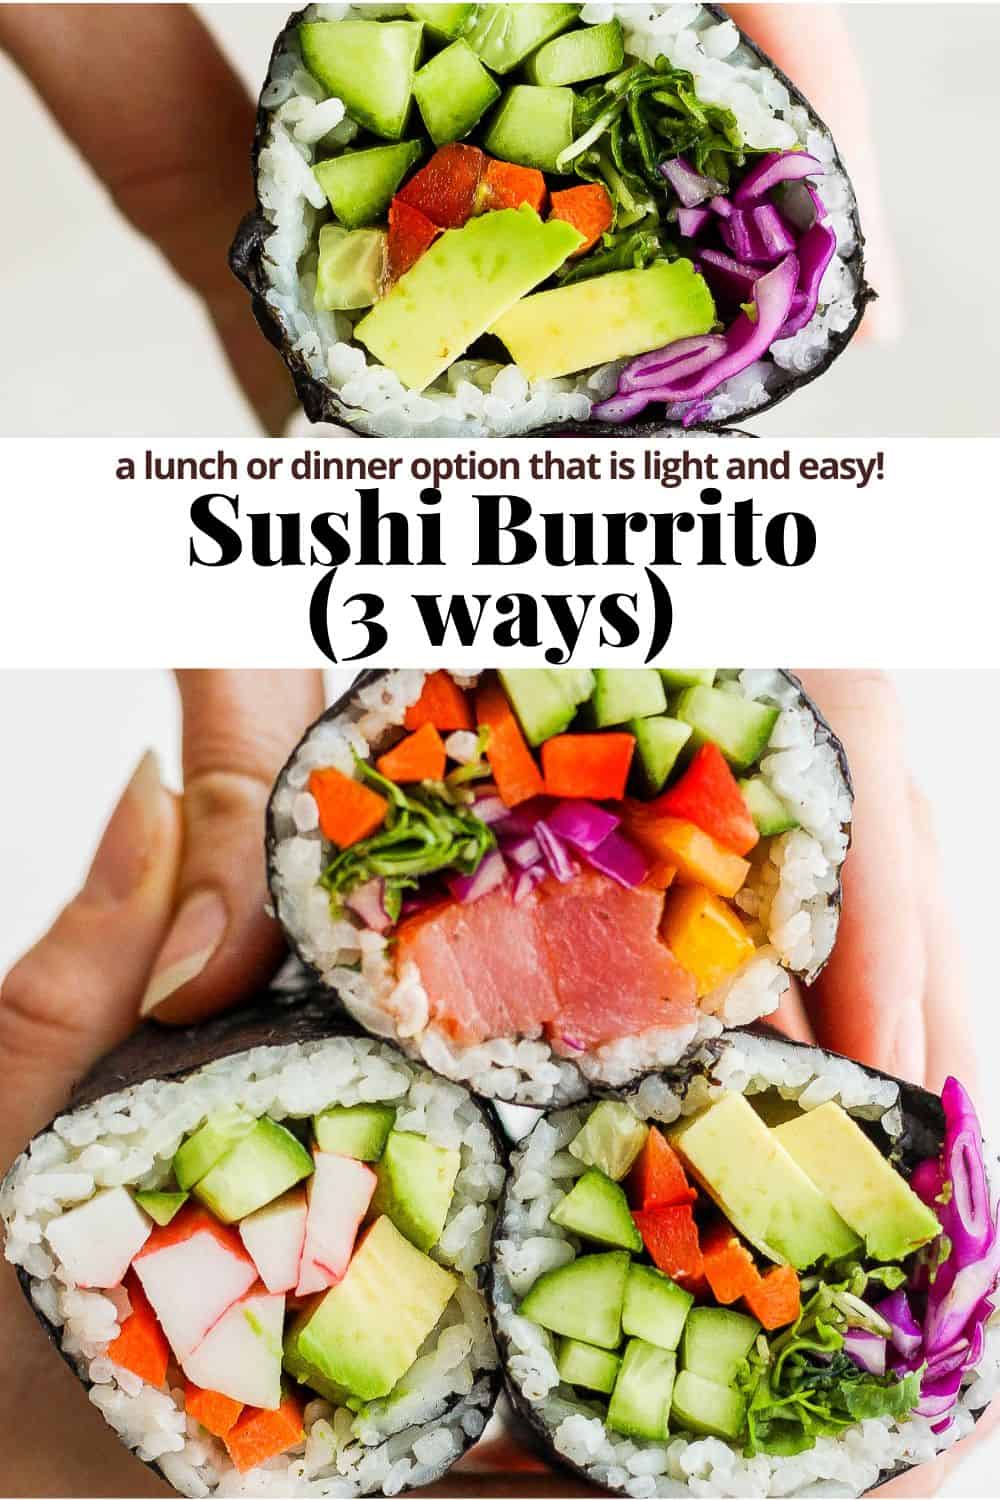 Pinterest image for sushi burritos.